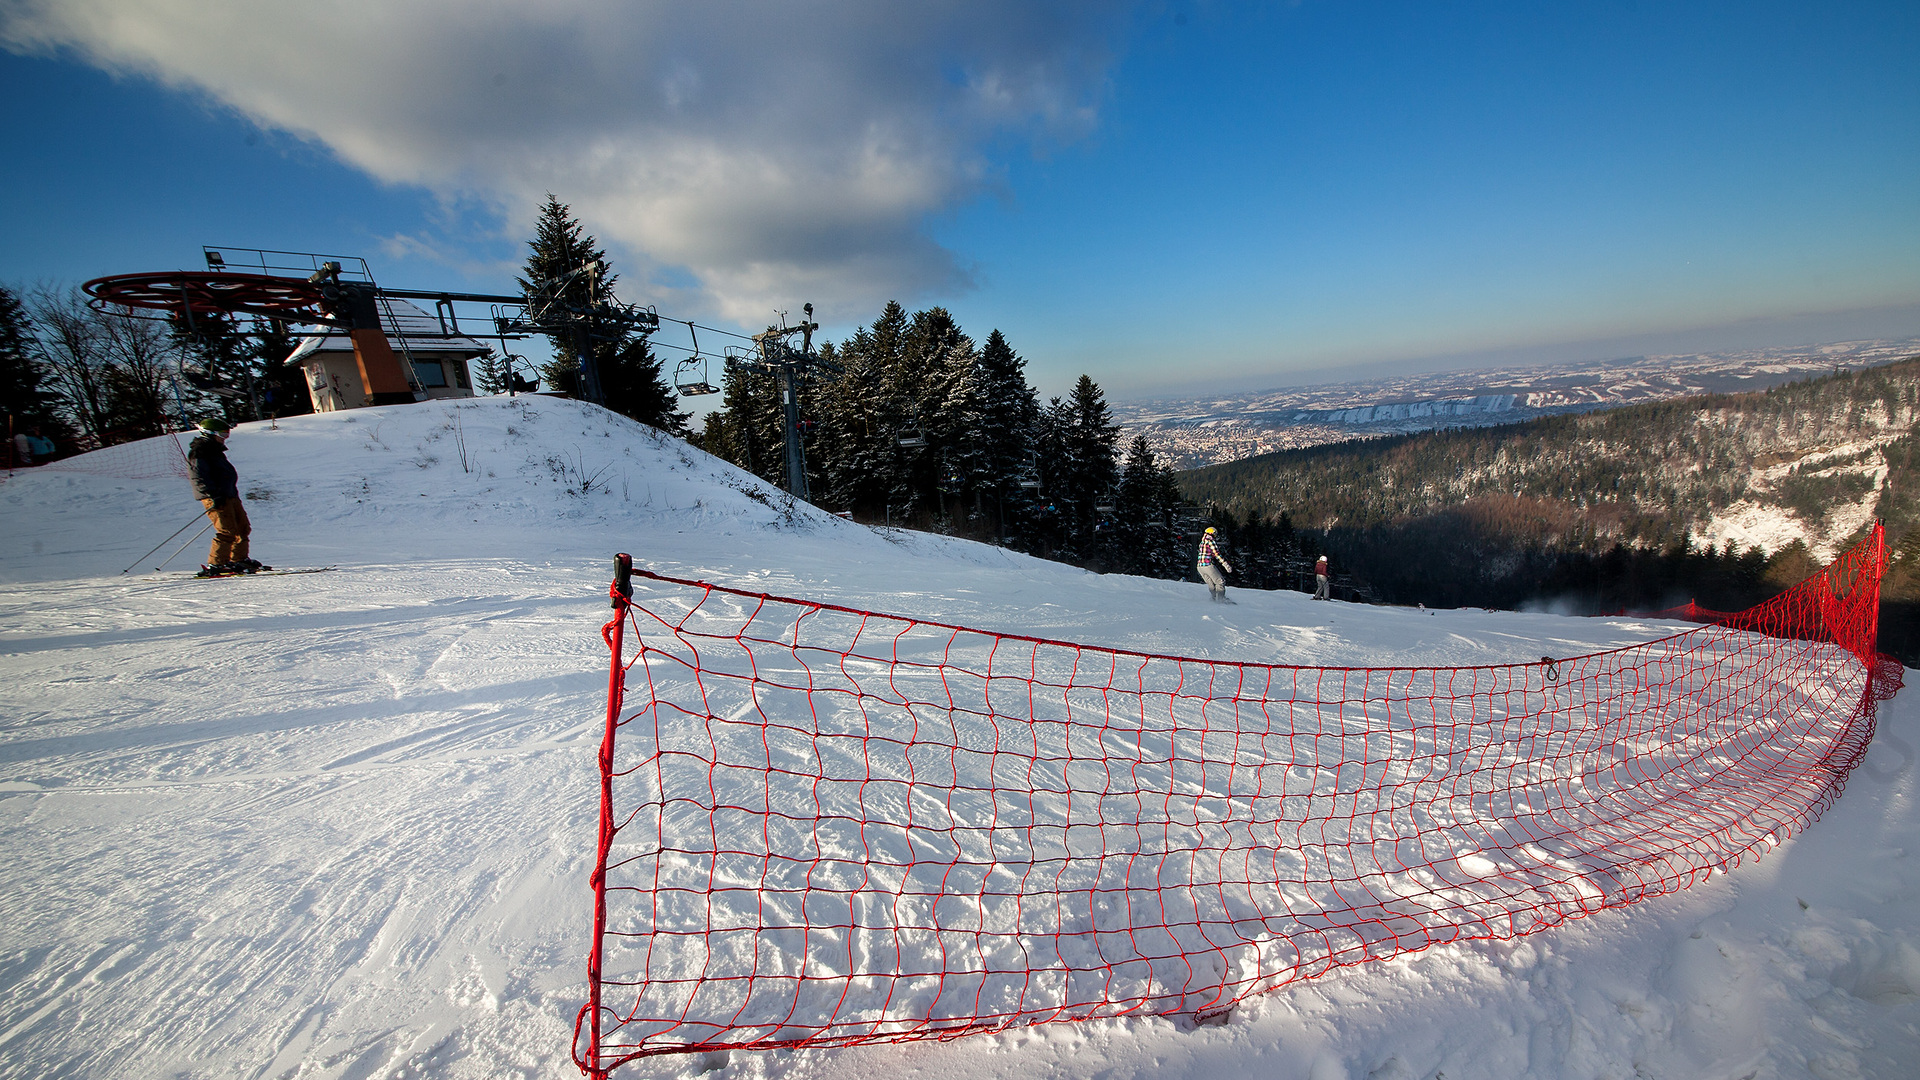 Stok narciarski na górze Chełm